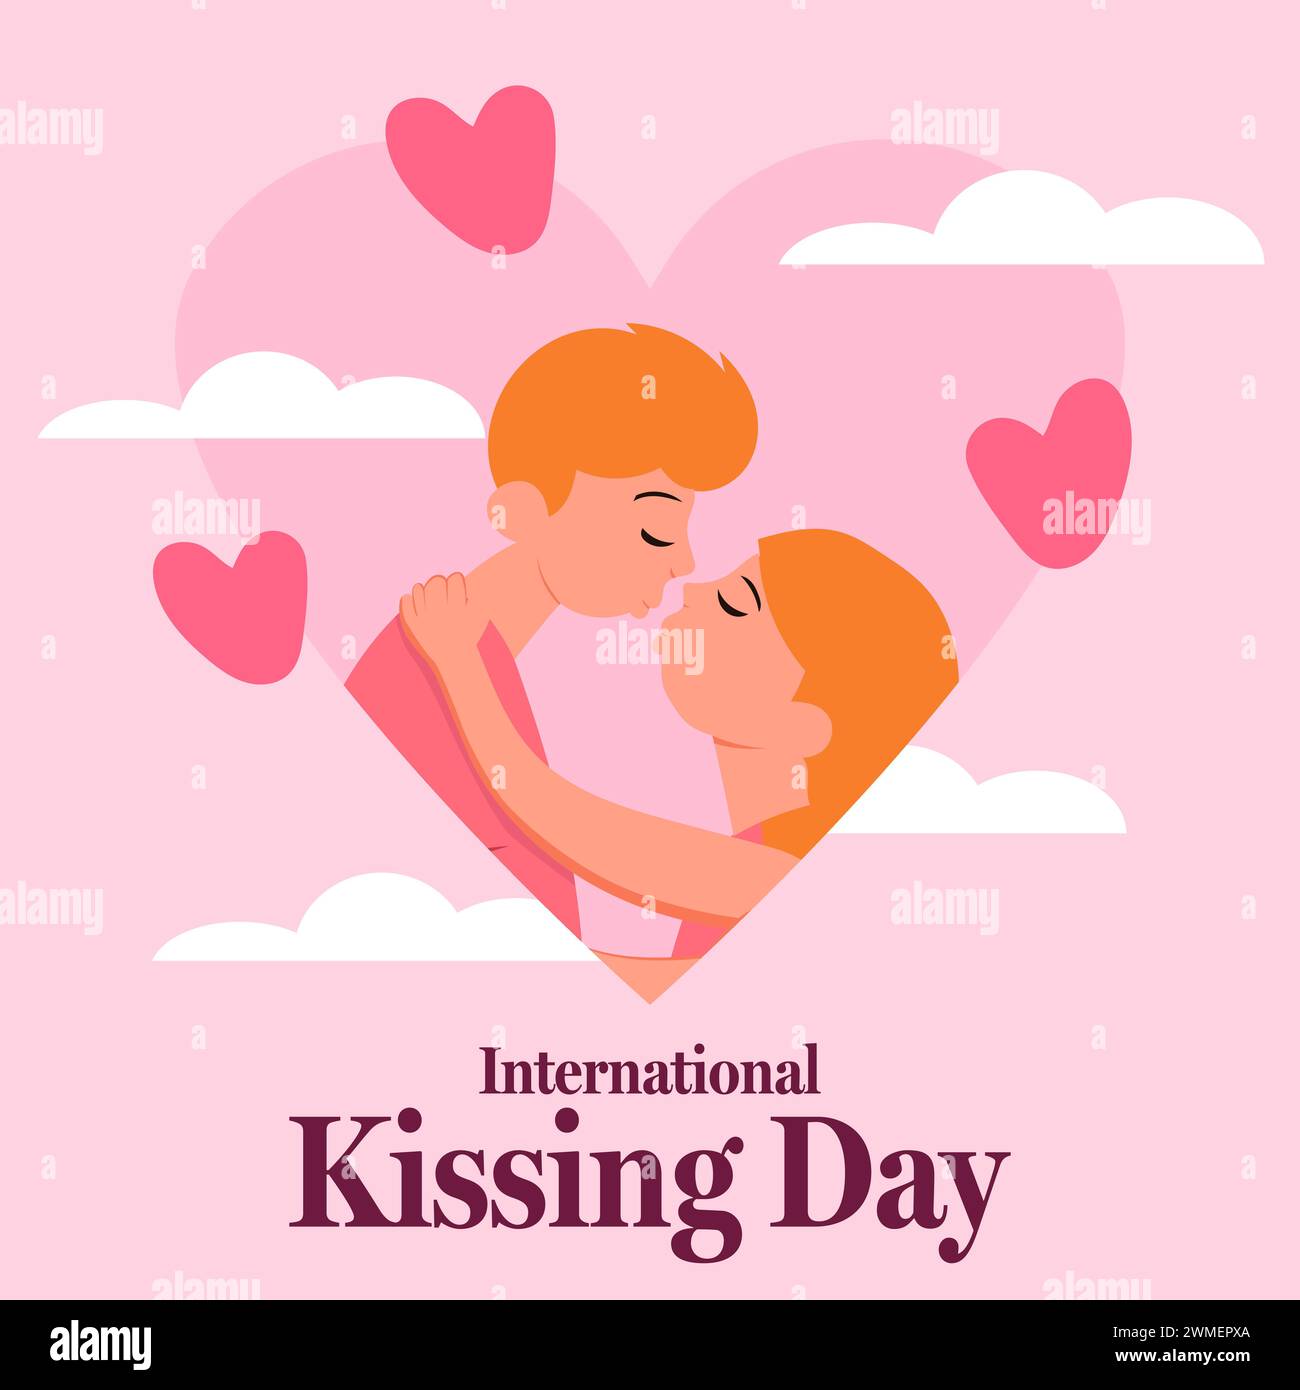 international kissing day illustration vector design Stock Vector